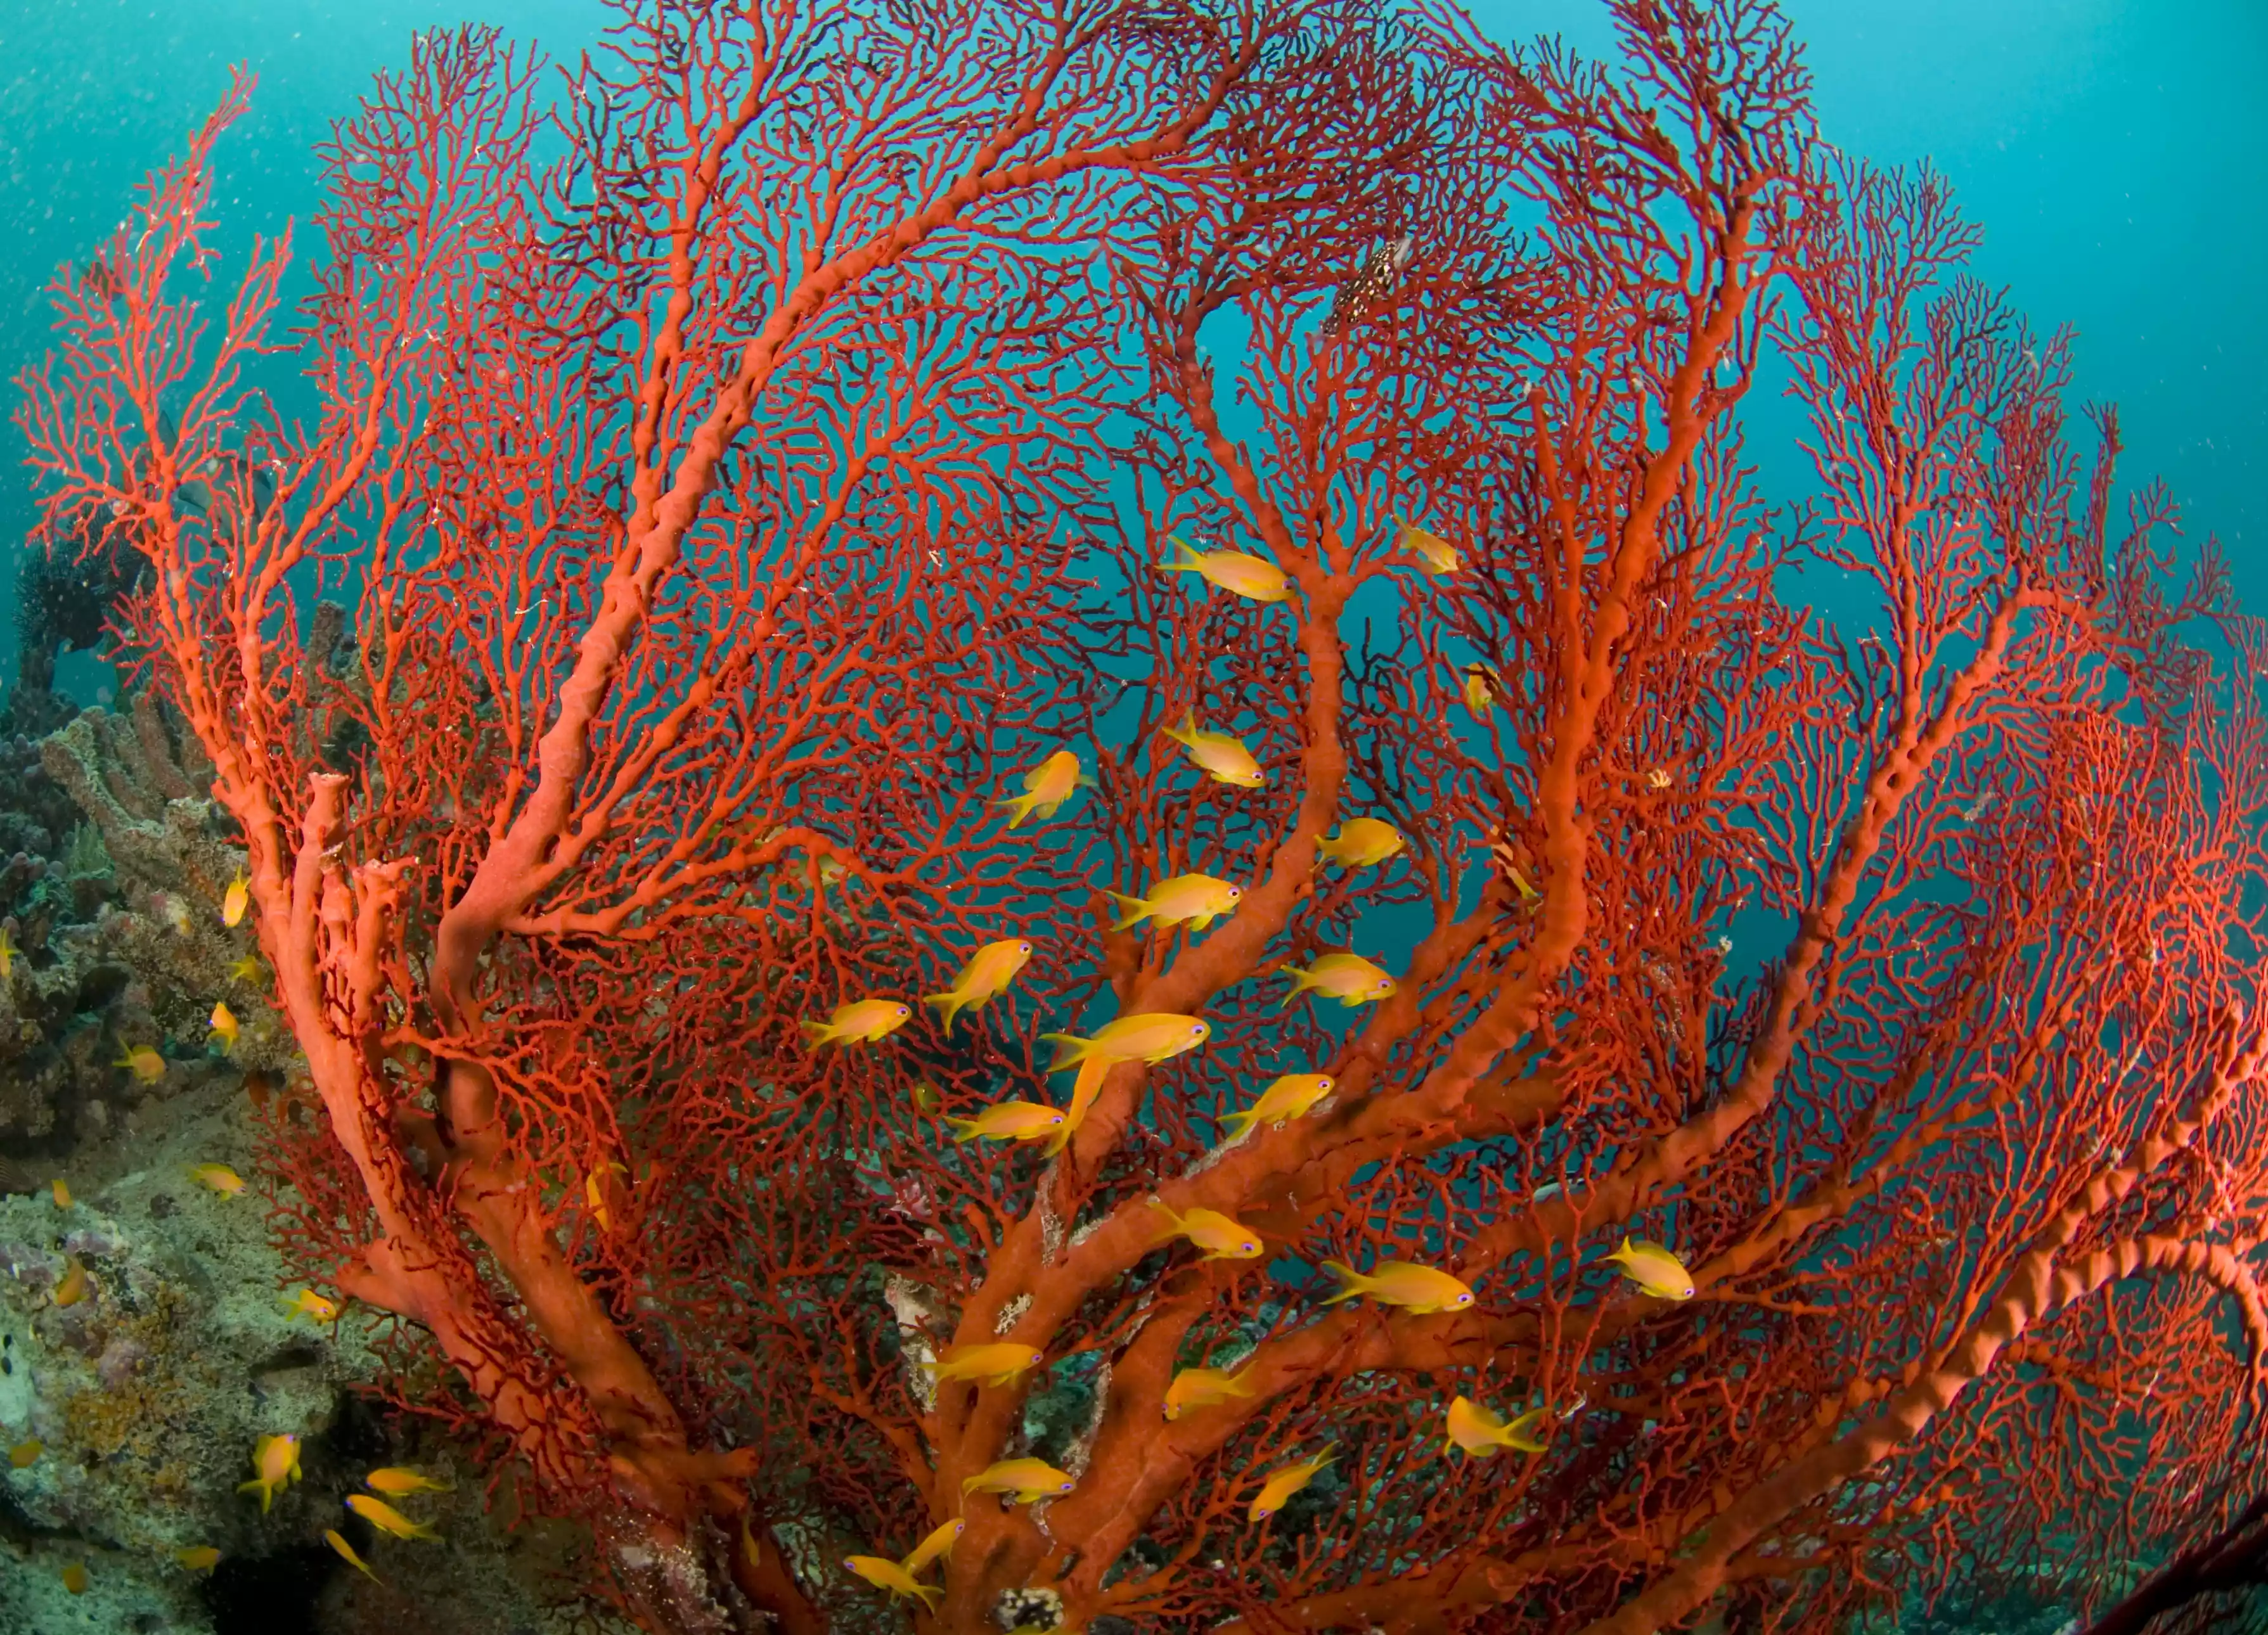 Orange fish swim through strands of fire coral.